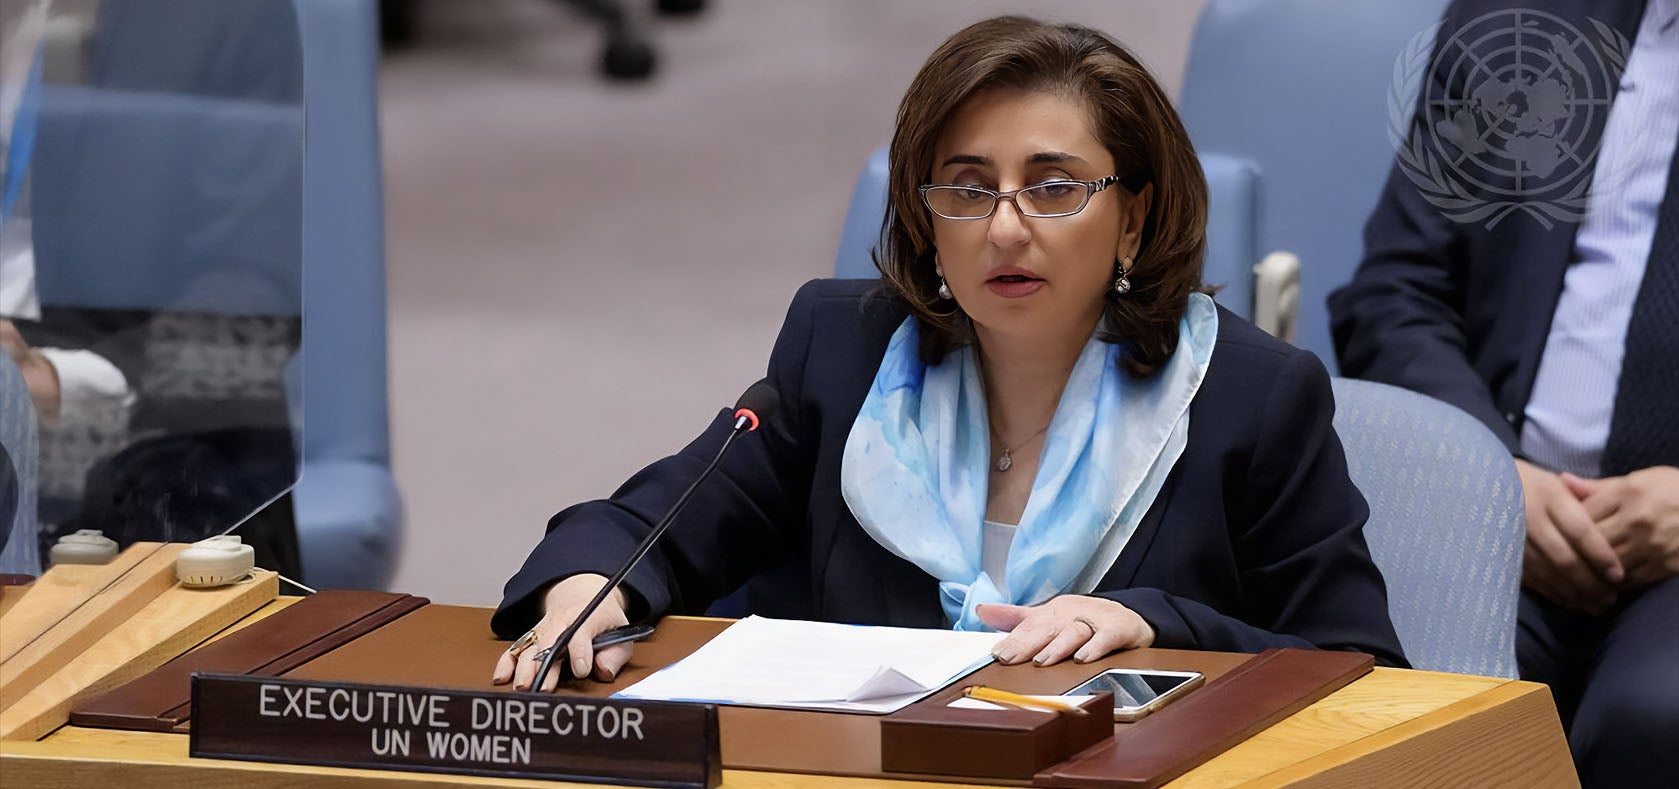 UN Under-Secretary-General and UN Women Executive Director Sima Bahous